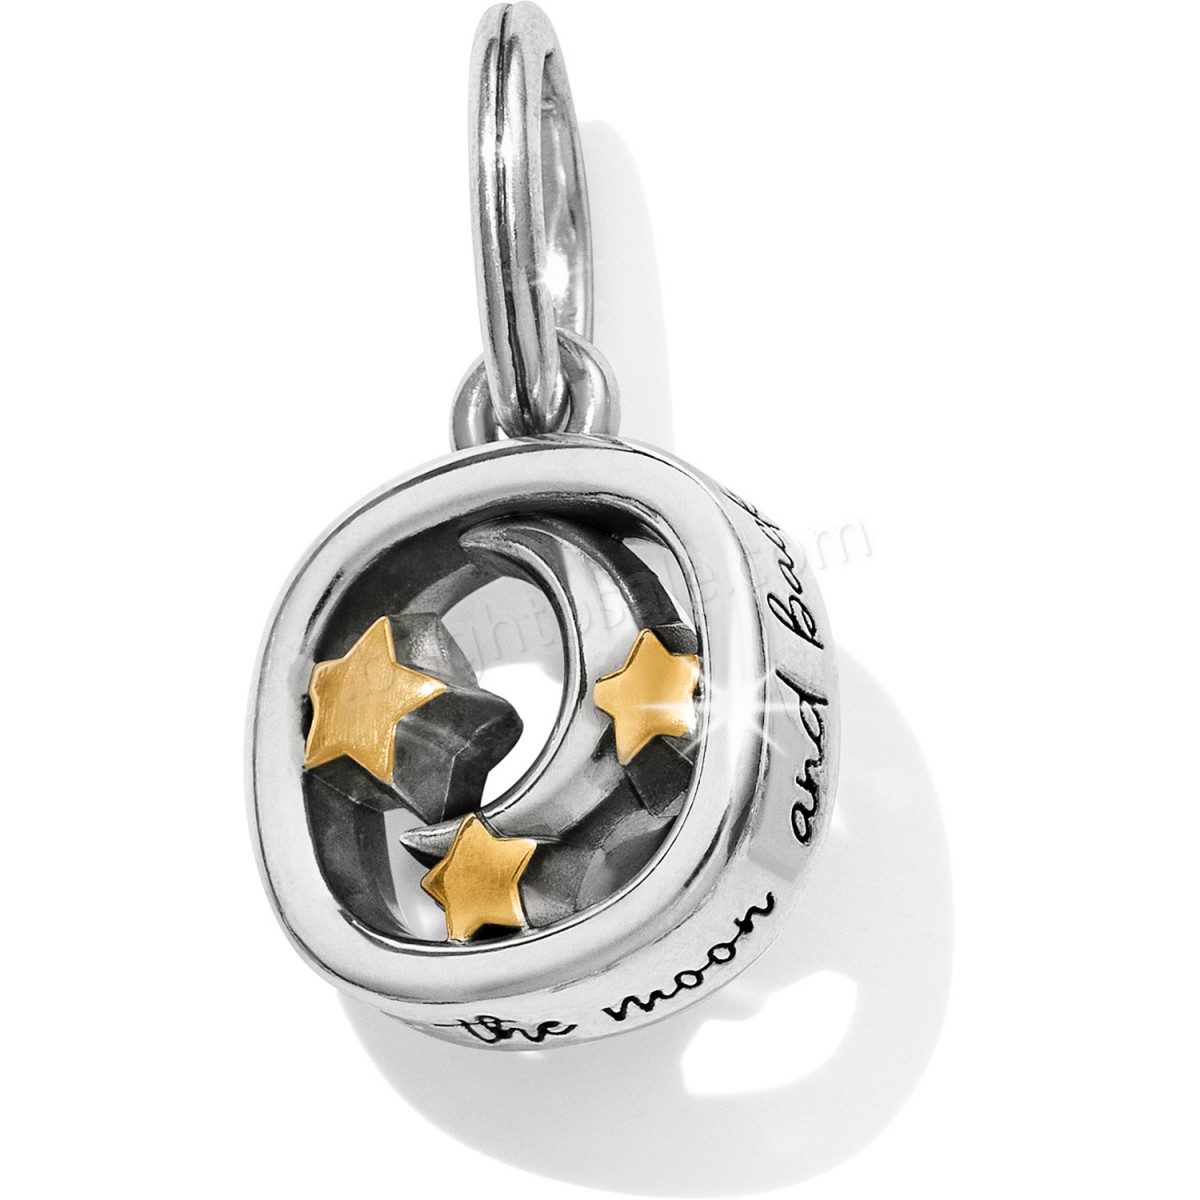 Brighton Collectibles & Online Discount Amorette Key Amulet Necklace Gift Set - -2